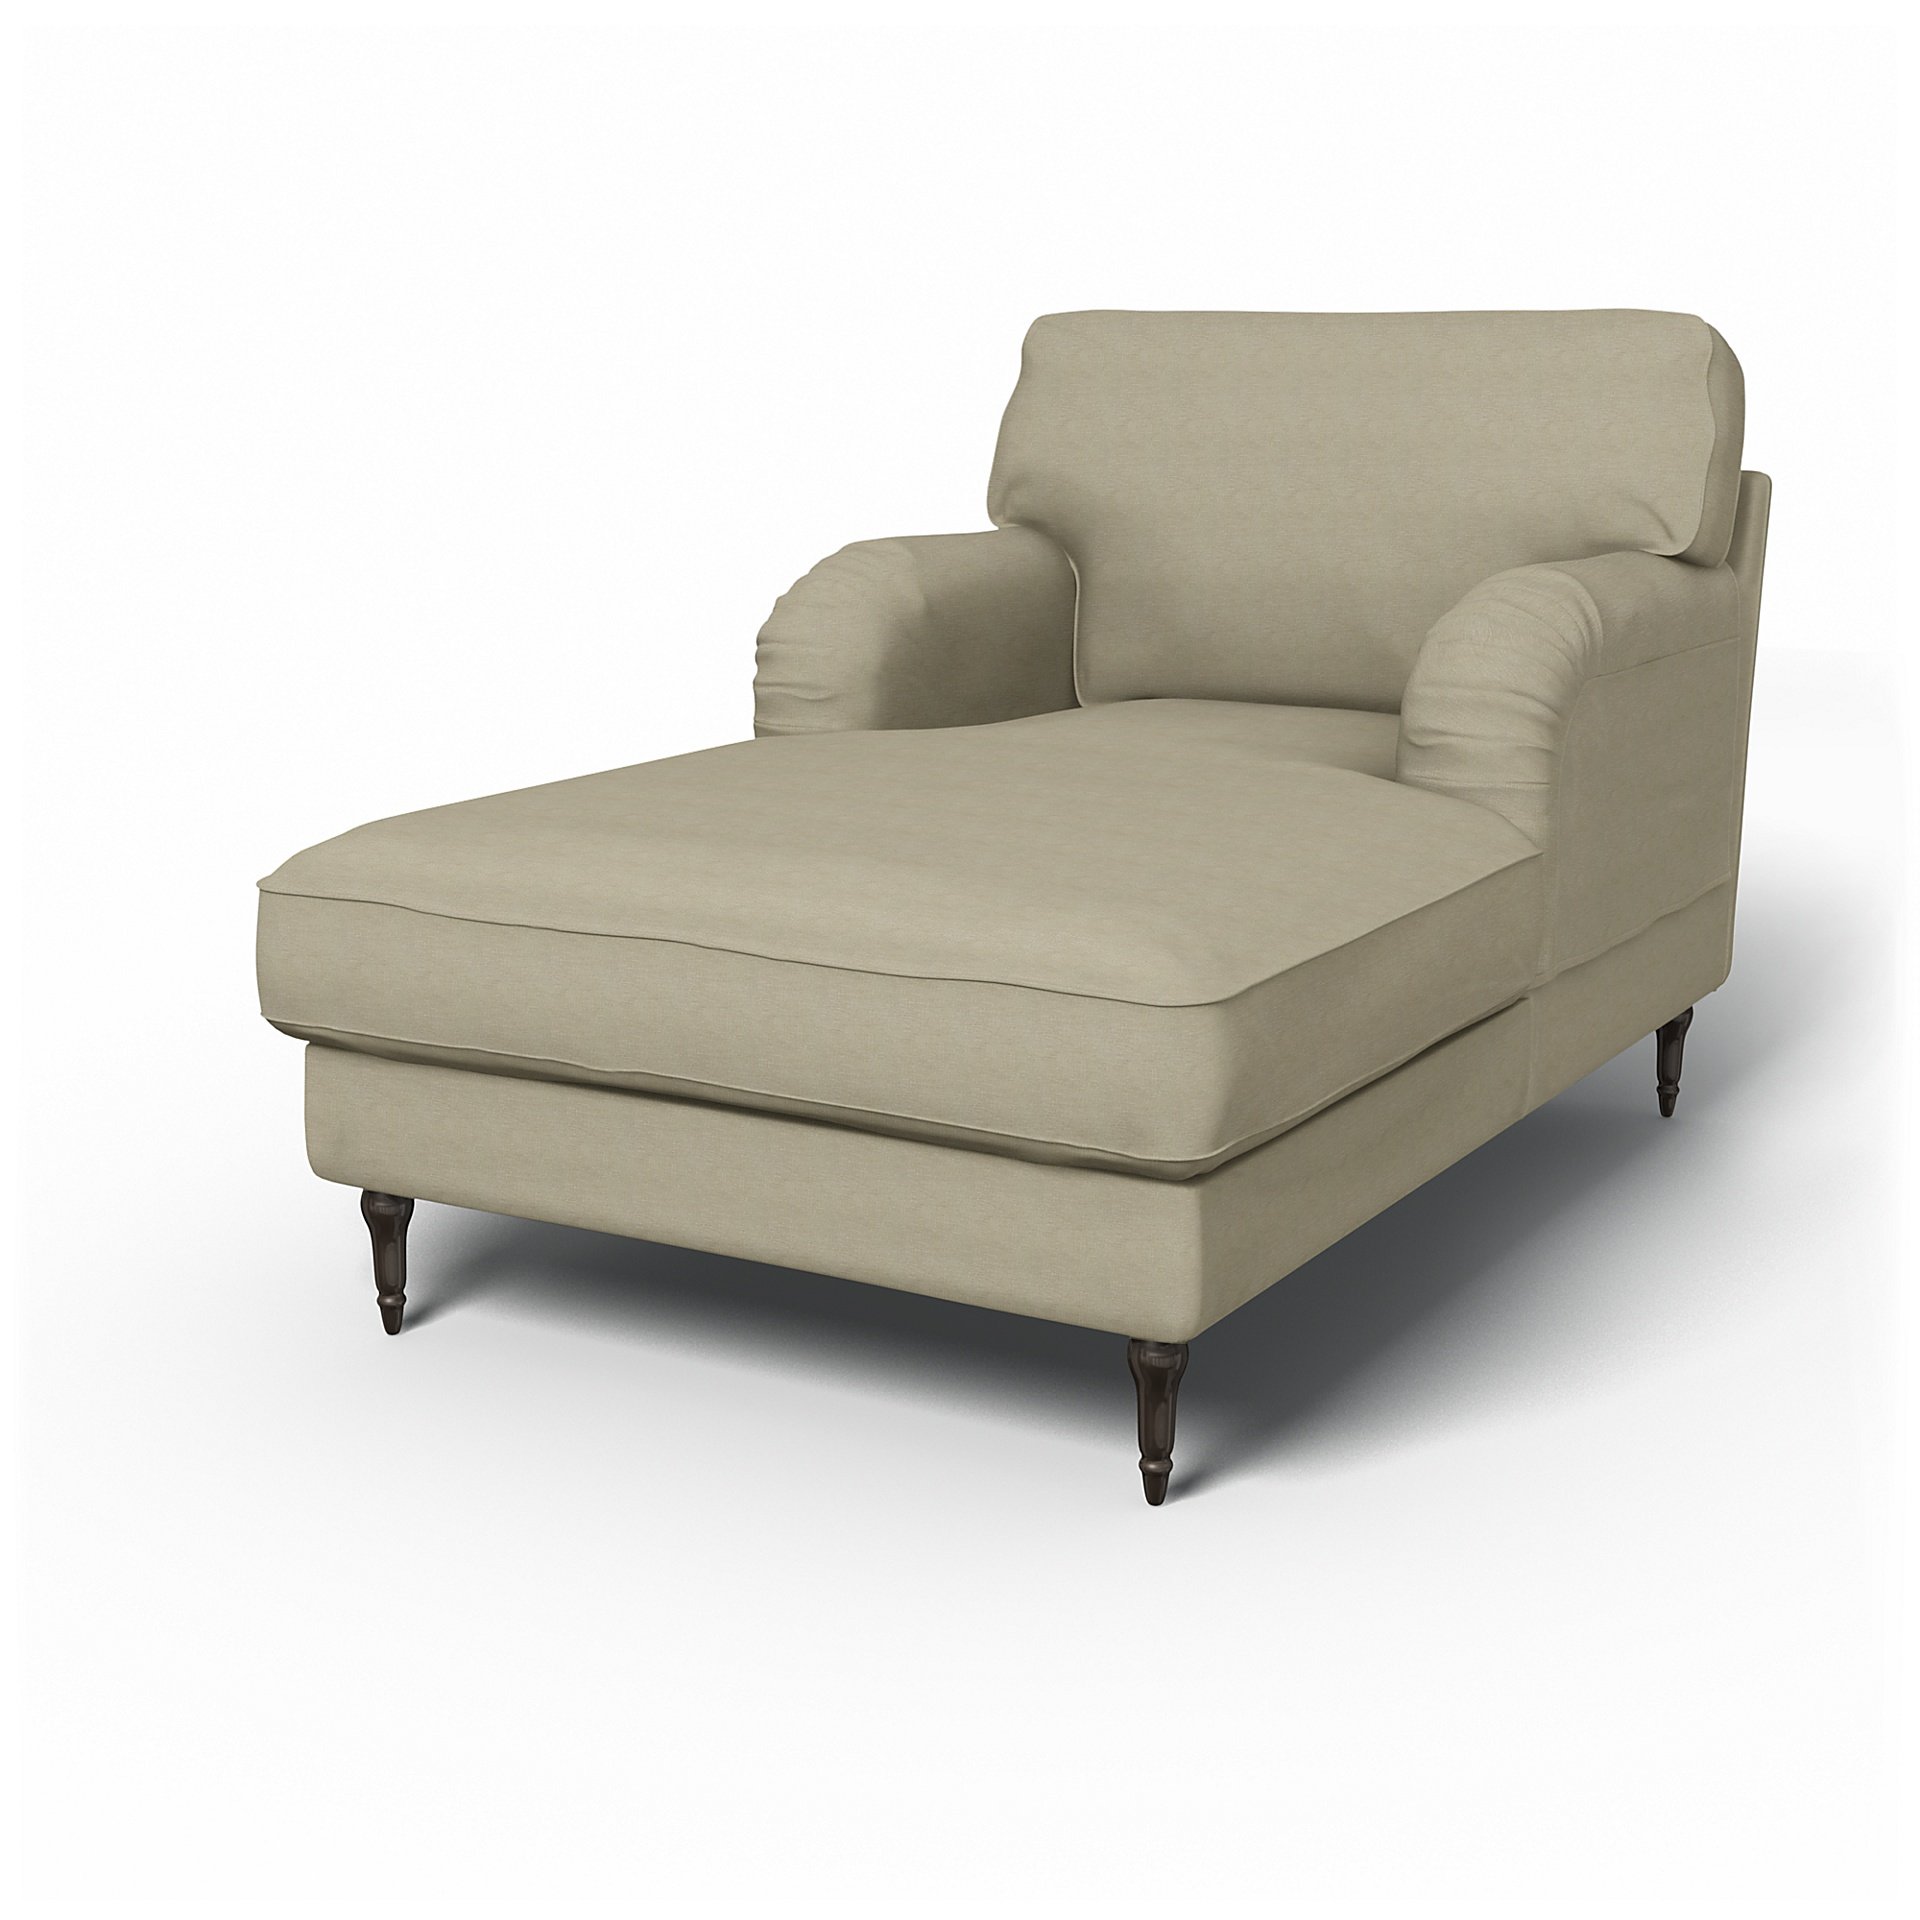 IKEA - Stocksund Chaise Longue Cover, Soft White, Boucle & Texture - Bemz